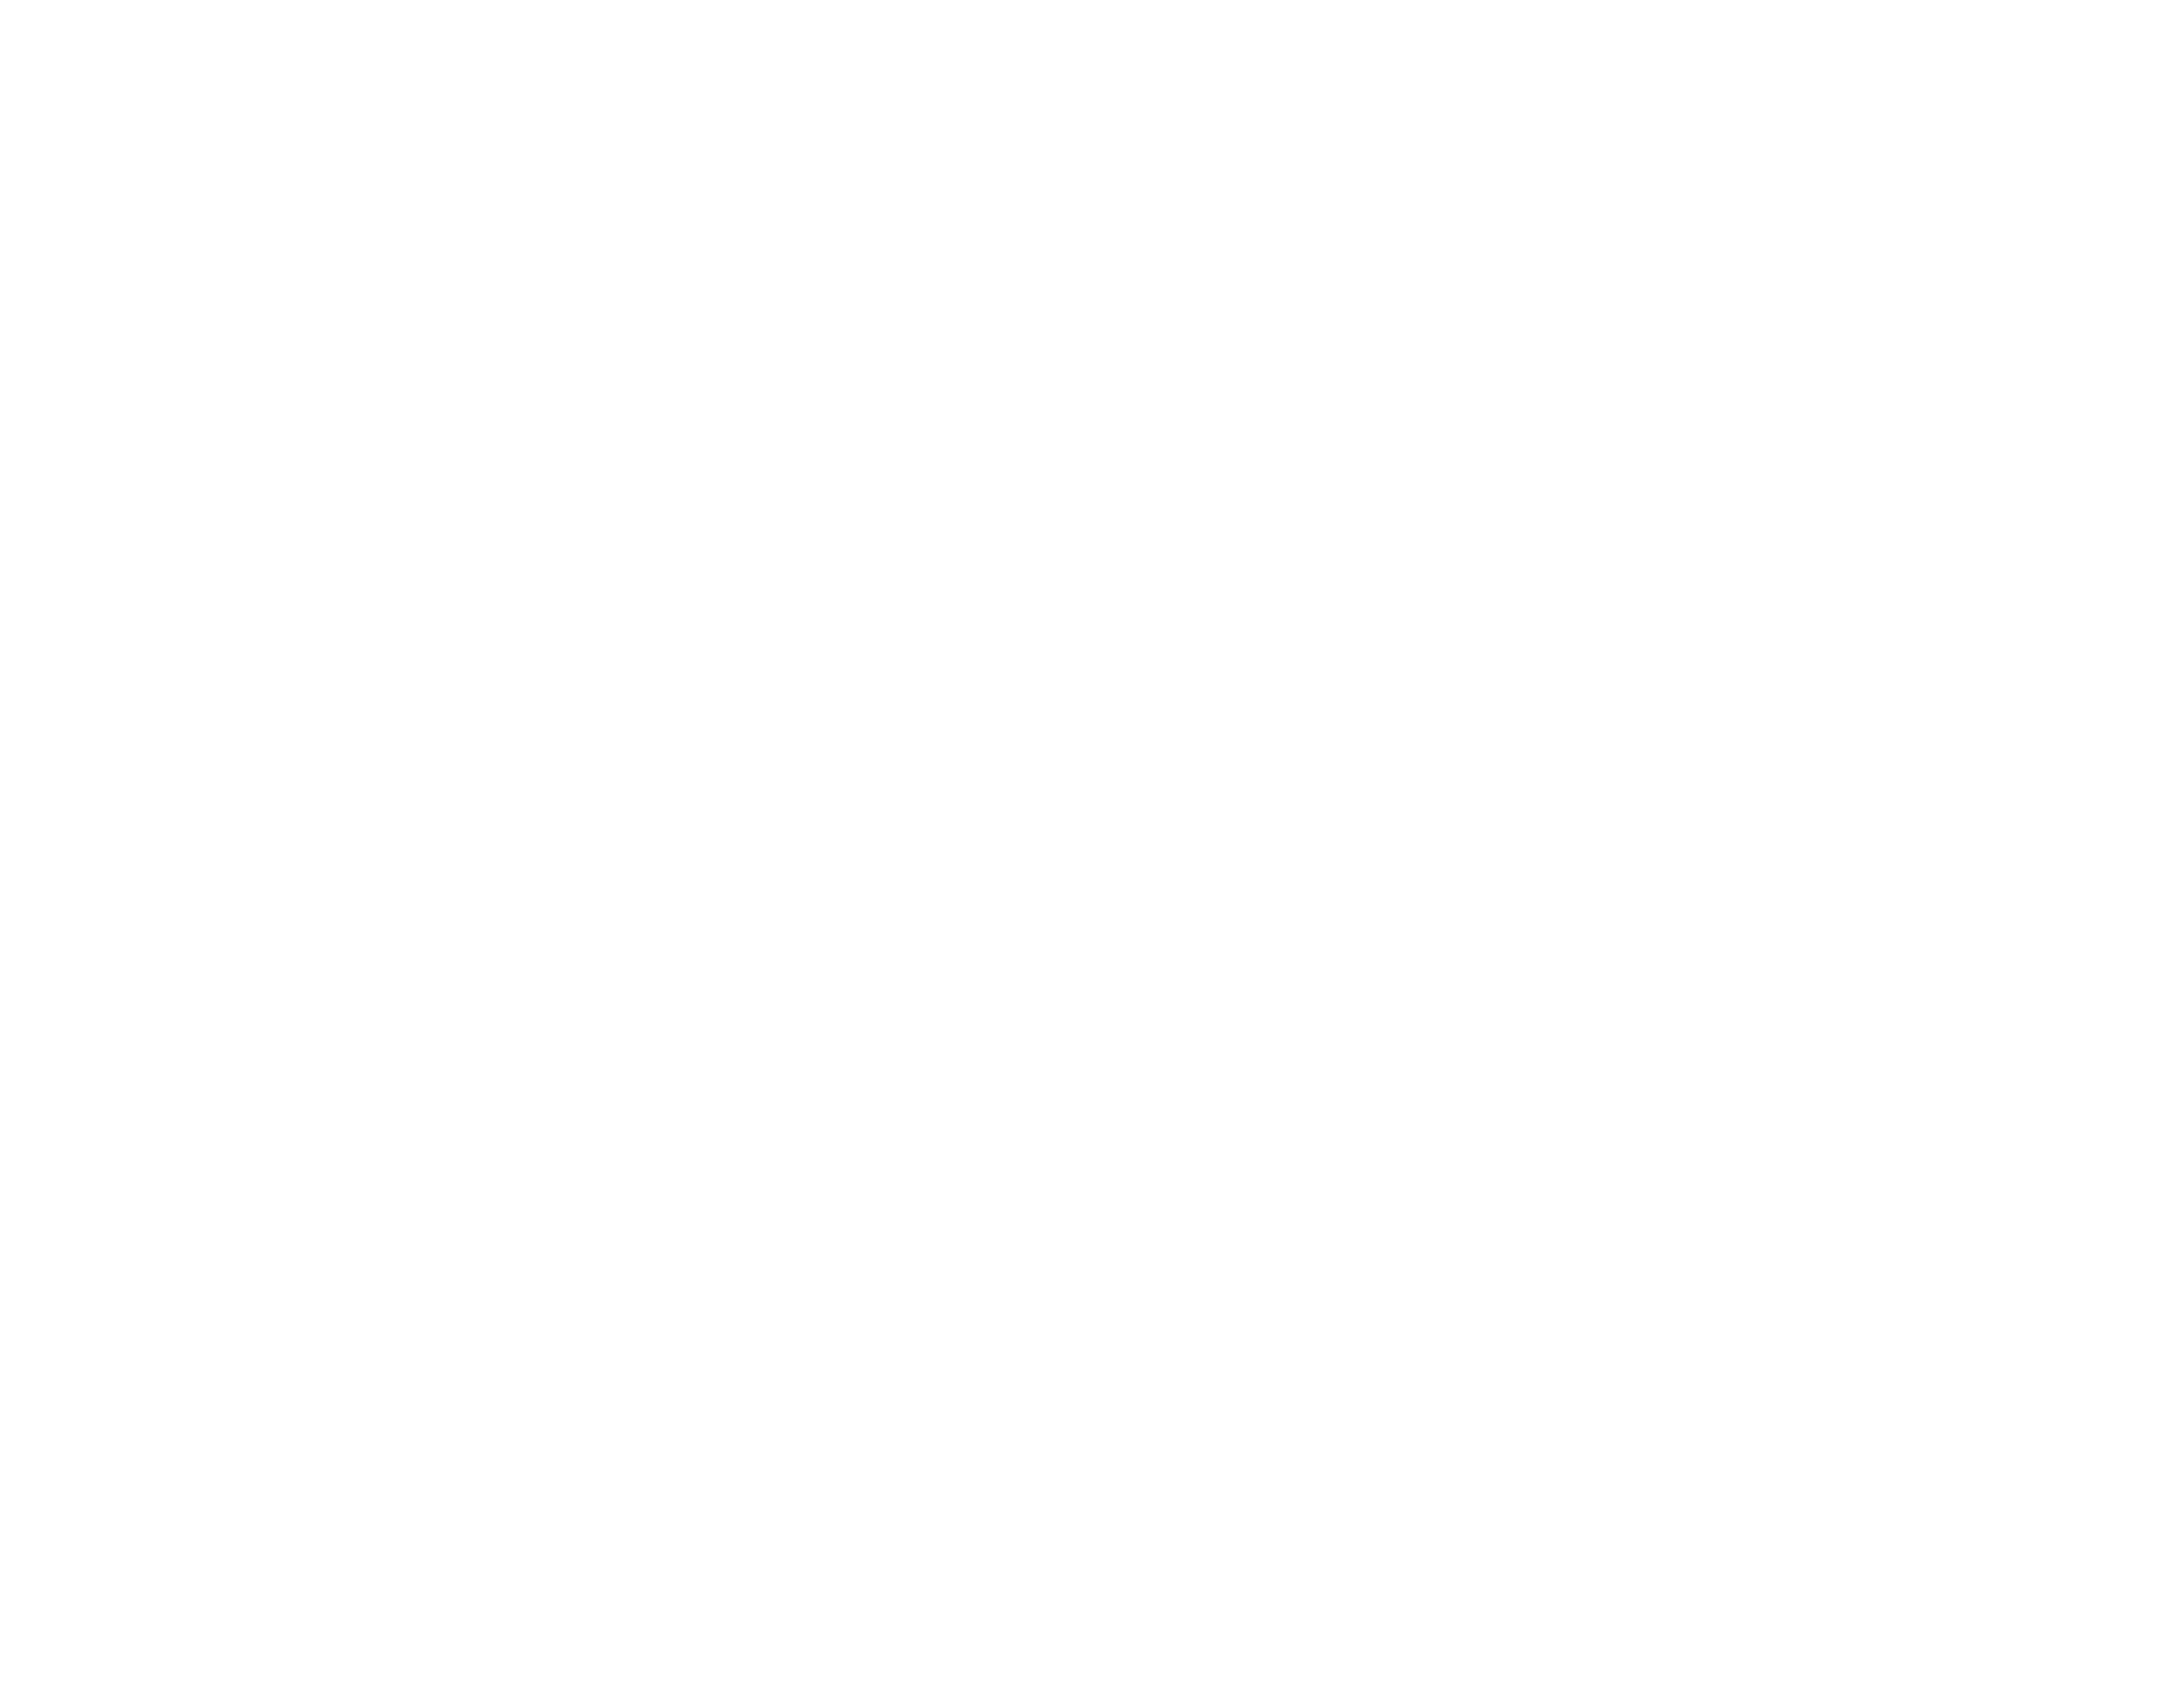 Accommodations at Chautauqua Institution in Chautauqua, NY